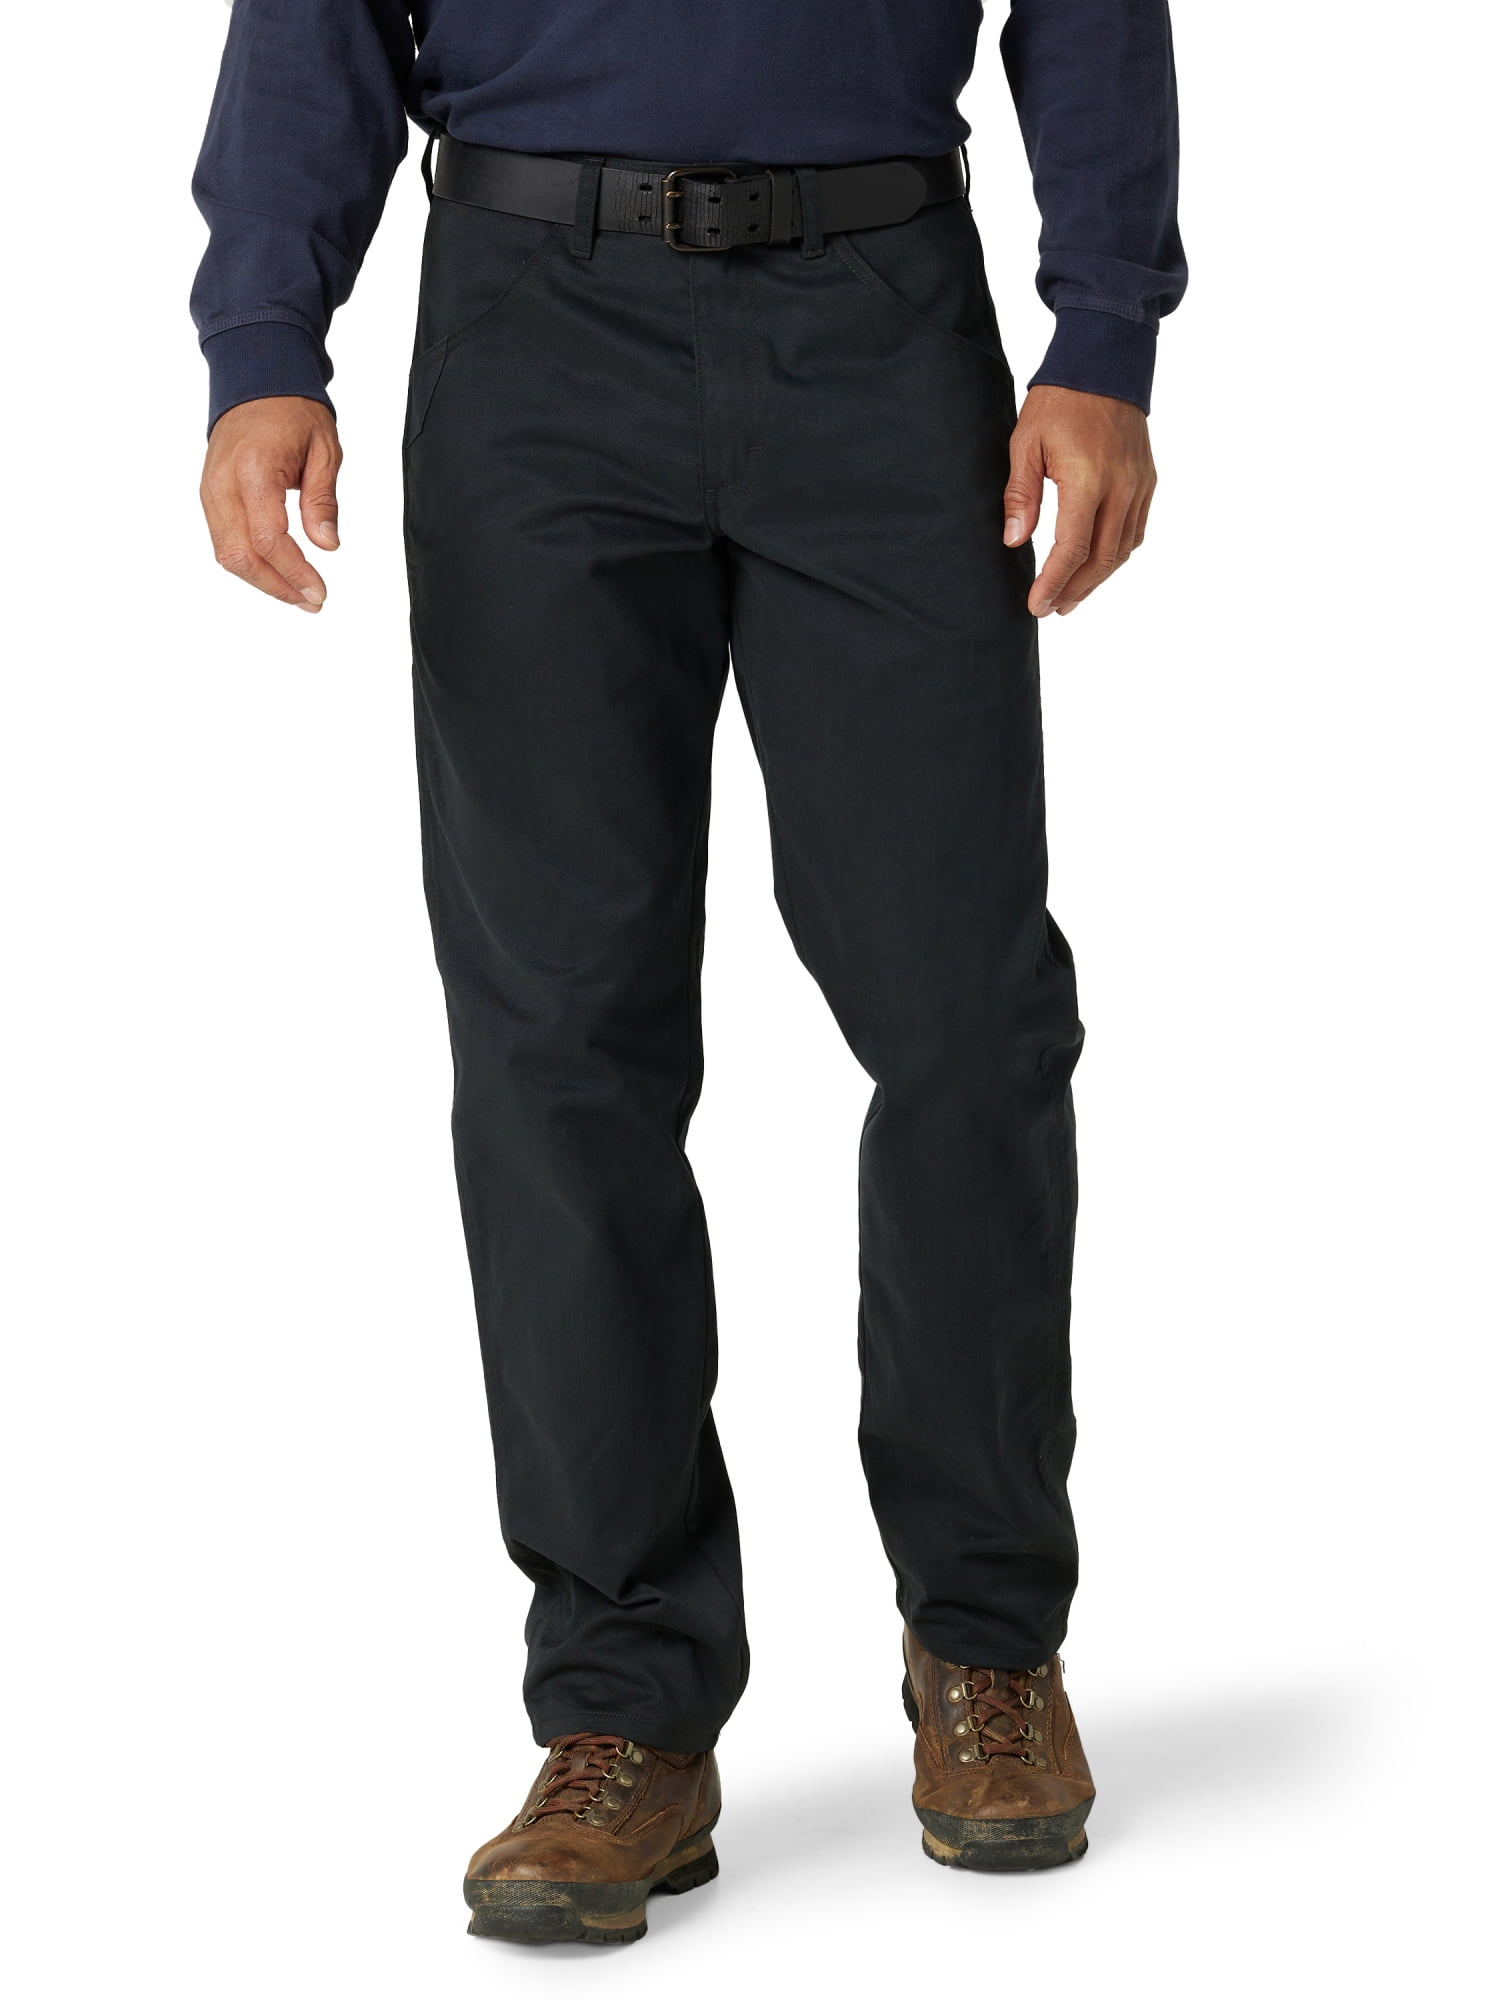 Men's Wrangler Workwear Relaxed Pant, Sizes 32-44